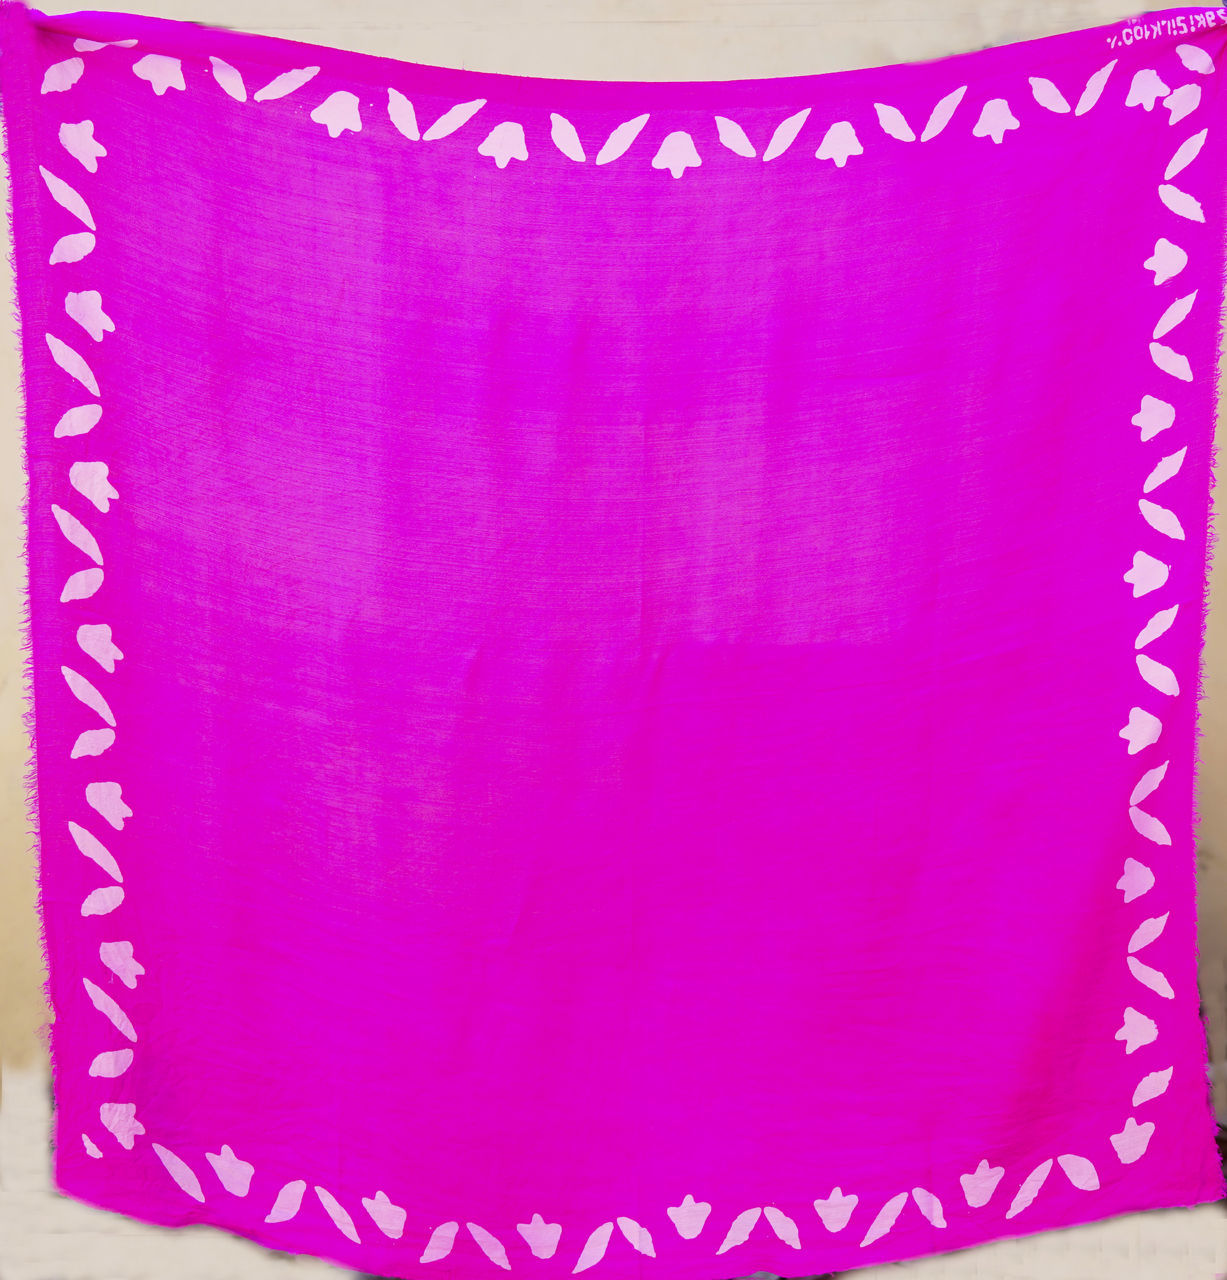 pink, magenta, purple, violet, no people, textile, close-up, indoors, copy space, pattern, lavender, lilac